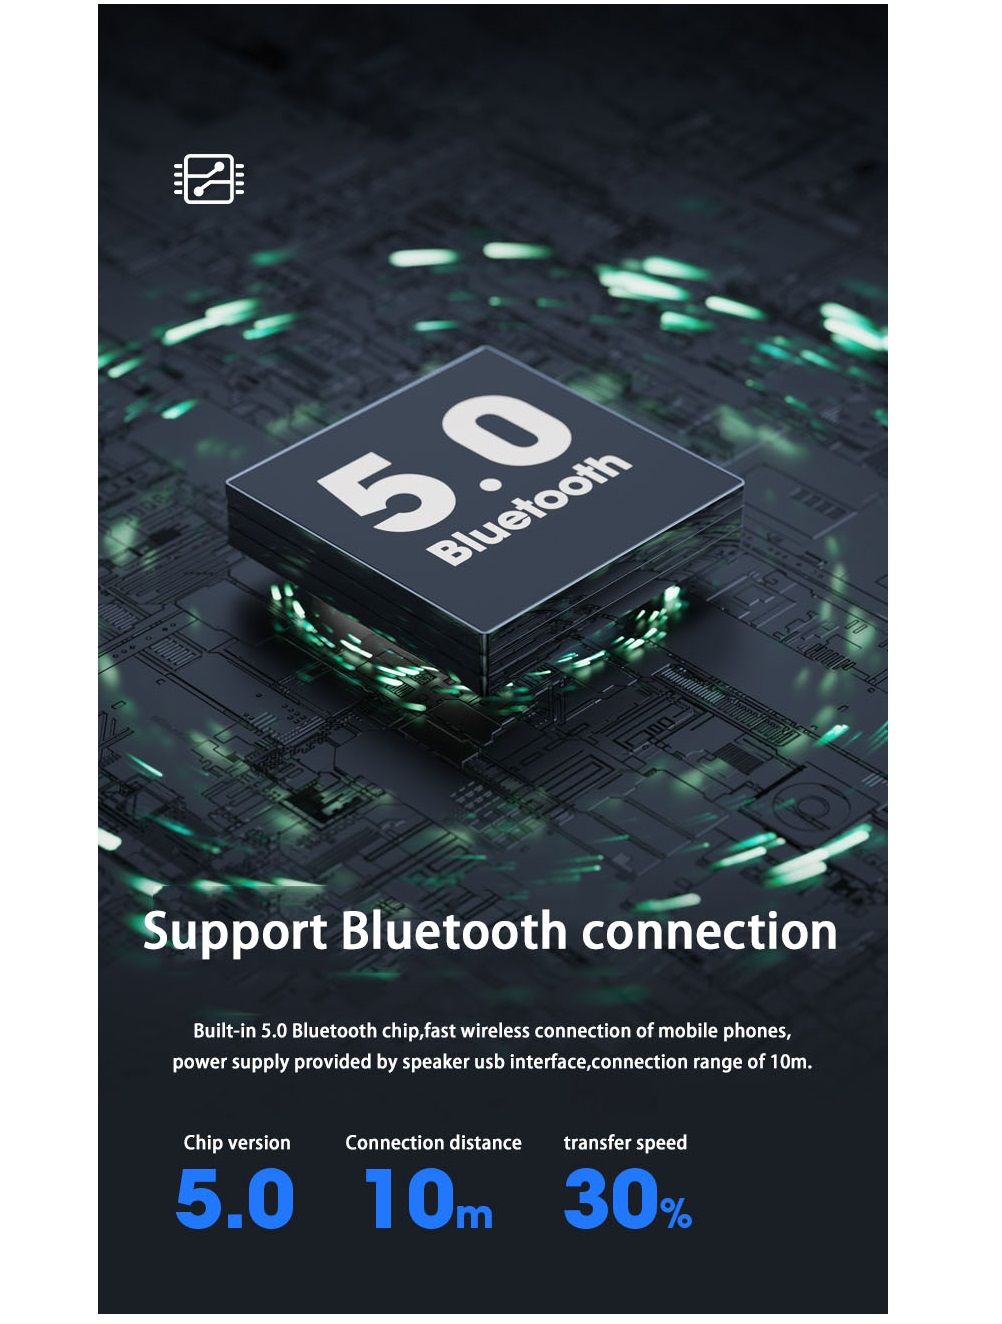 Langjing-A3-bluebooth50-Computer-Speaker-Surround-Sound-Powerful-Bass-USB-Plug-Button-Adjustment-Wir-1740518